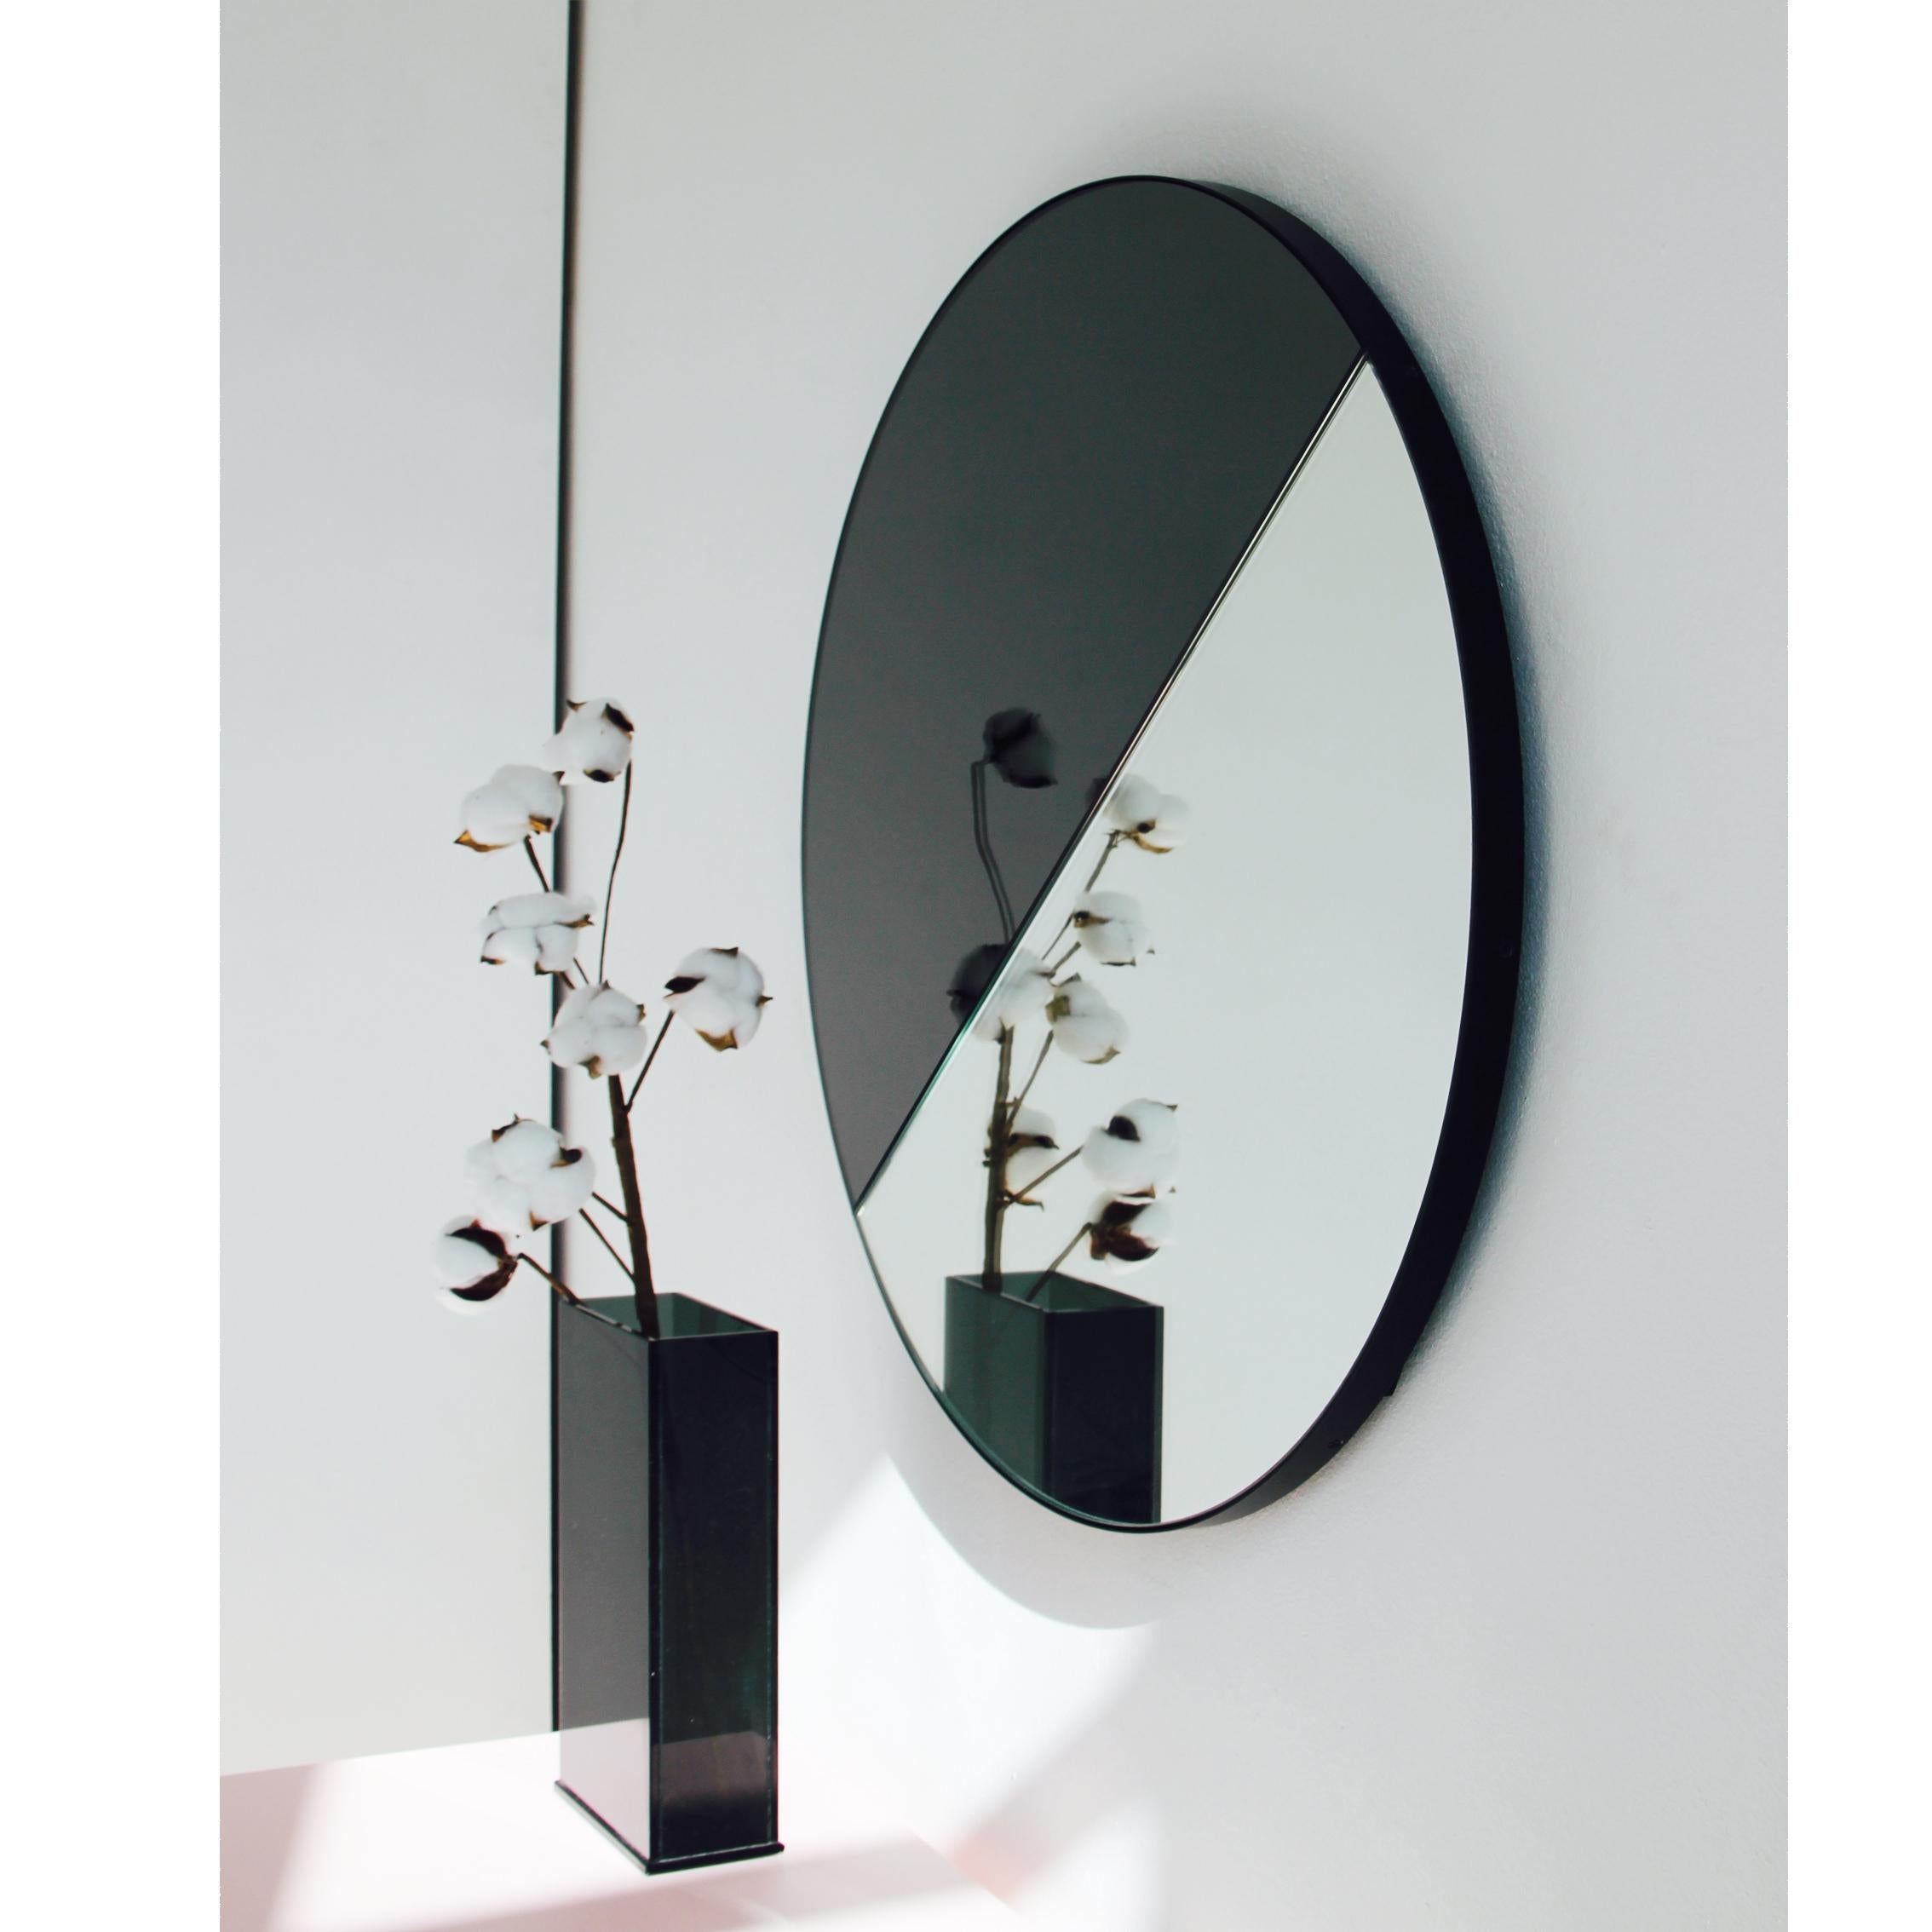 Organique Orbis Dualis Mixed Black Tint Minimalist Round Mirror with Black Frame, Medium en vente